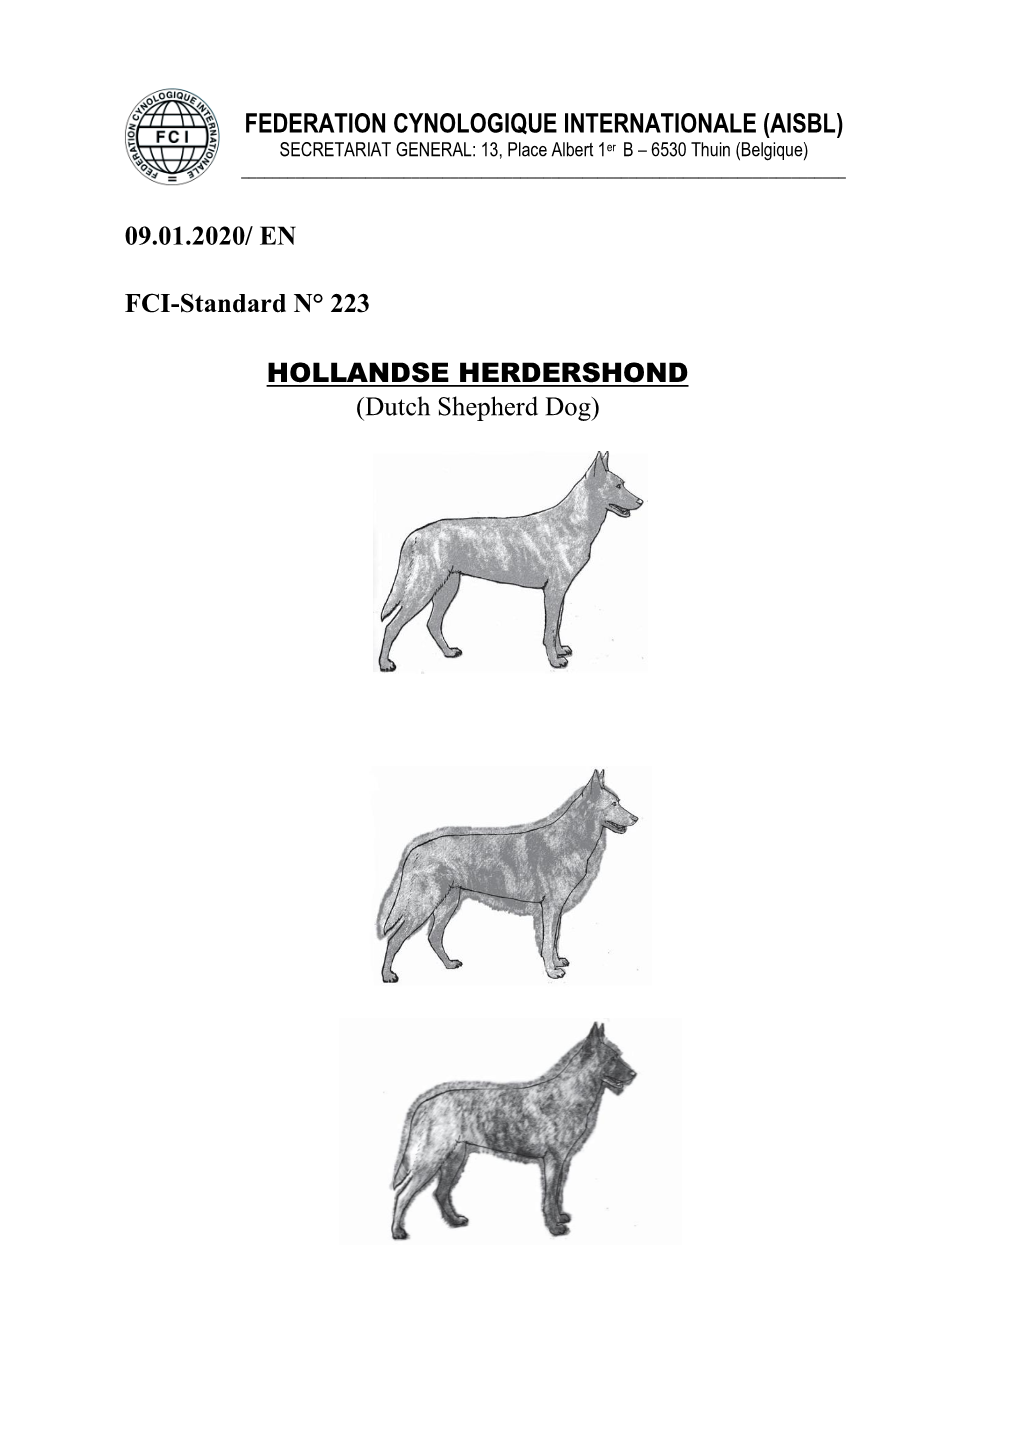 FEDERATION CYNOLOGIQUE INTERNATIONALE (AISBL) 09.01.2020/ EN FCI-Standard N° 223 HOLLANDSE HERDERSHOND (Dutch Shepherd Dog)